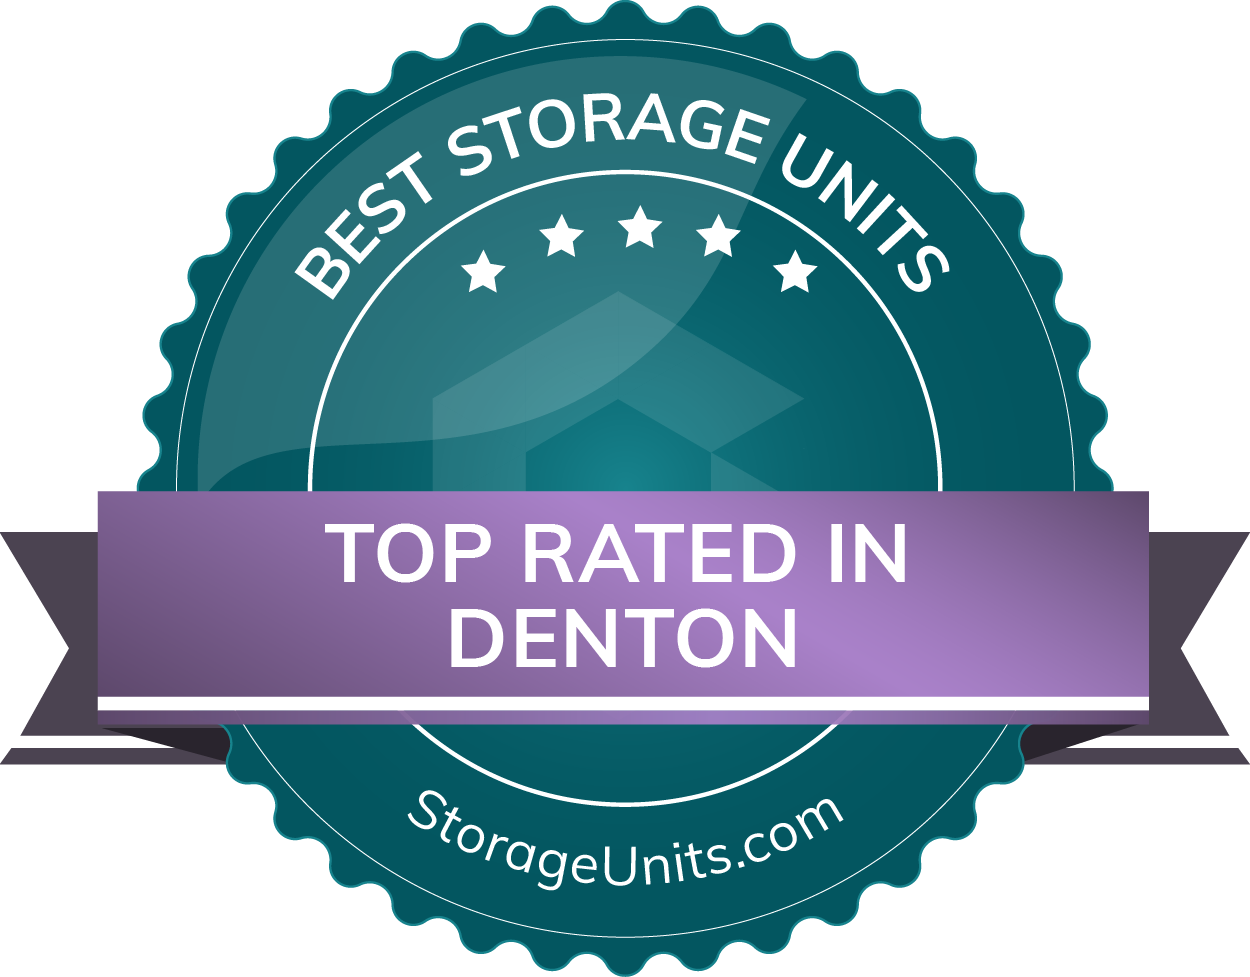 Best Self Storage Units in Denton, Texas of 2022